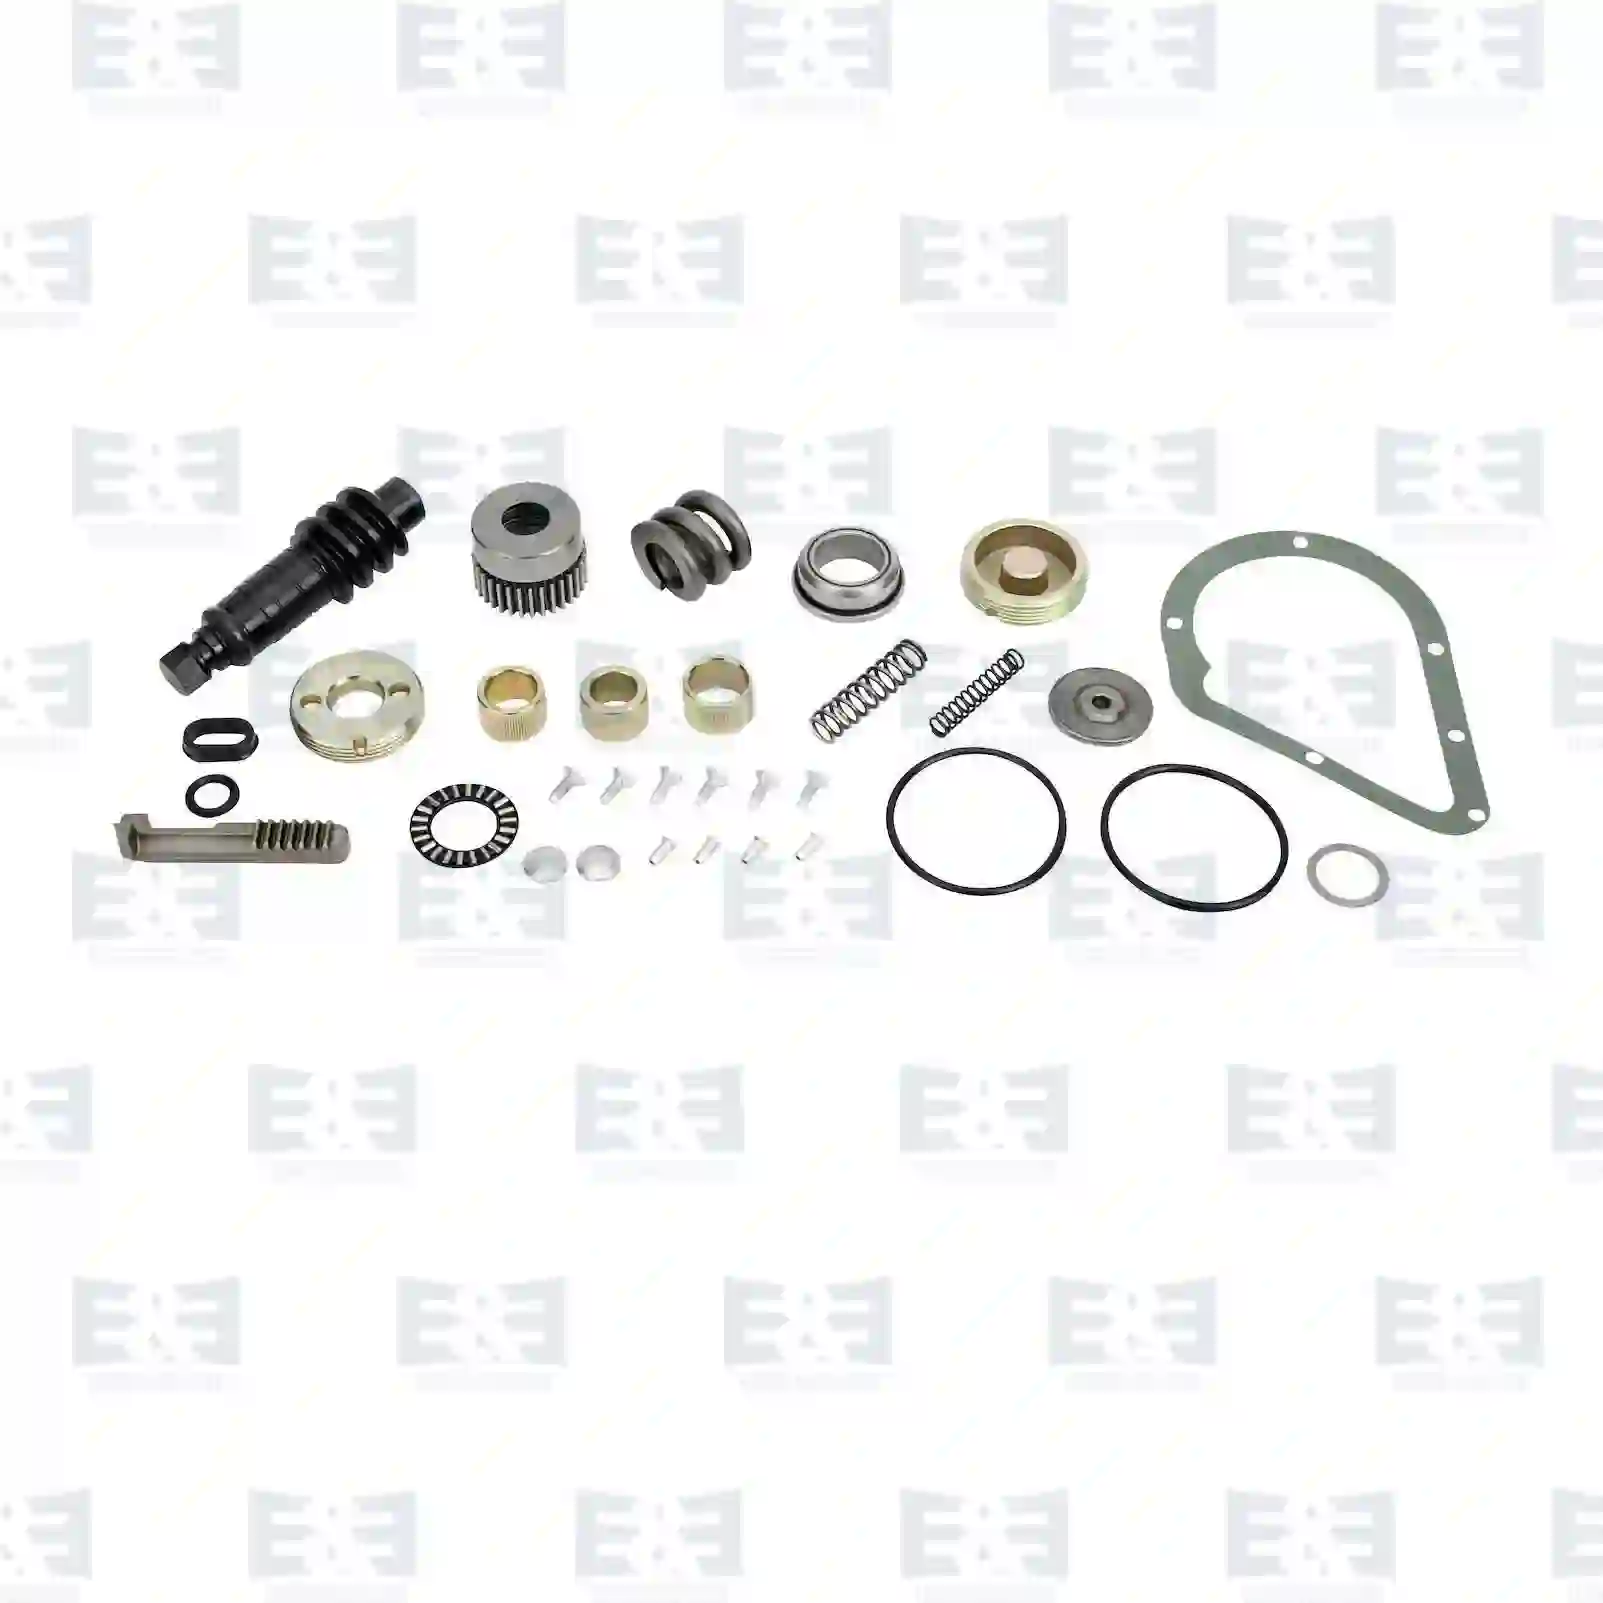 Slack Adjuster, Automatic Slack adjuster kit, EE No 2E2297477 ,  oem no:0871392, 871392, 81506106132, 81506120001, 0004200092, 0025861142, 5001825536, 1350817, 324729, 3091286 E&E Truck Spare Parts | Truck Spare Parts, Auotomotive Spare Parts